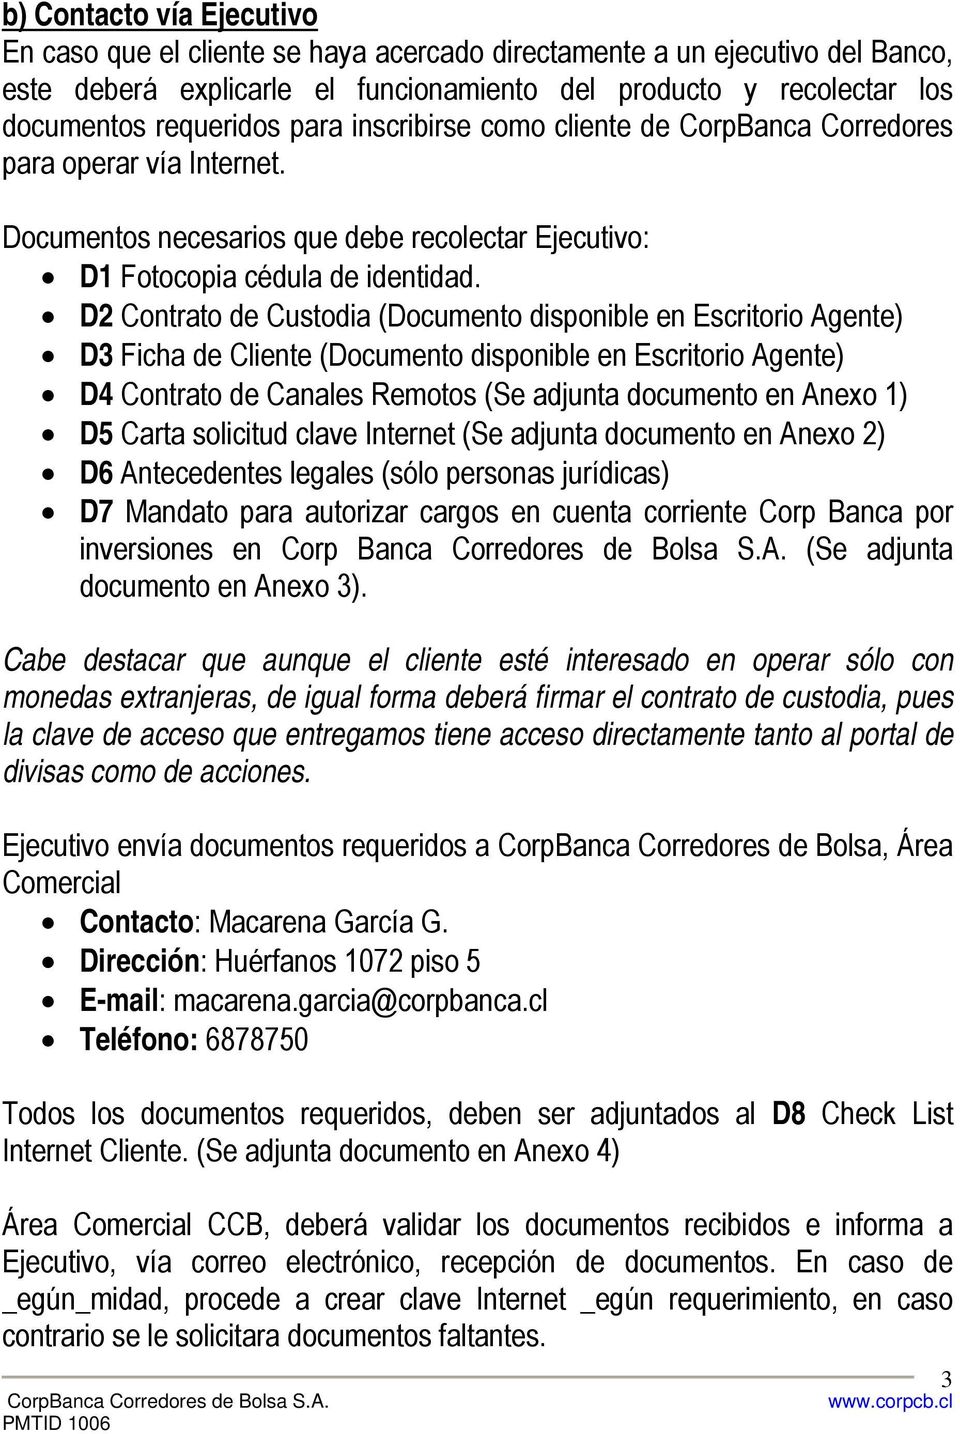 D2 Contrato de Custodia (Documento disponible en Escritorio Agente) D3 Ficha de Cliente (Documento disponible en Escritorio Agente) D4 Contrato de Canales Remotos (Se adjunta documento en Anexo 1) D5